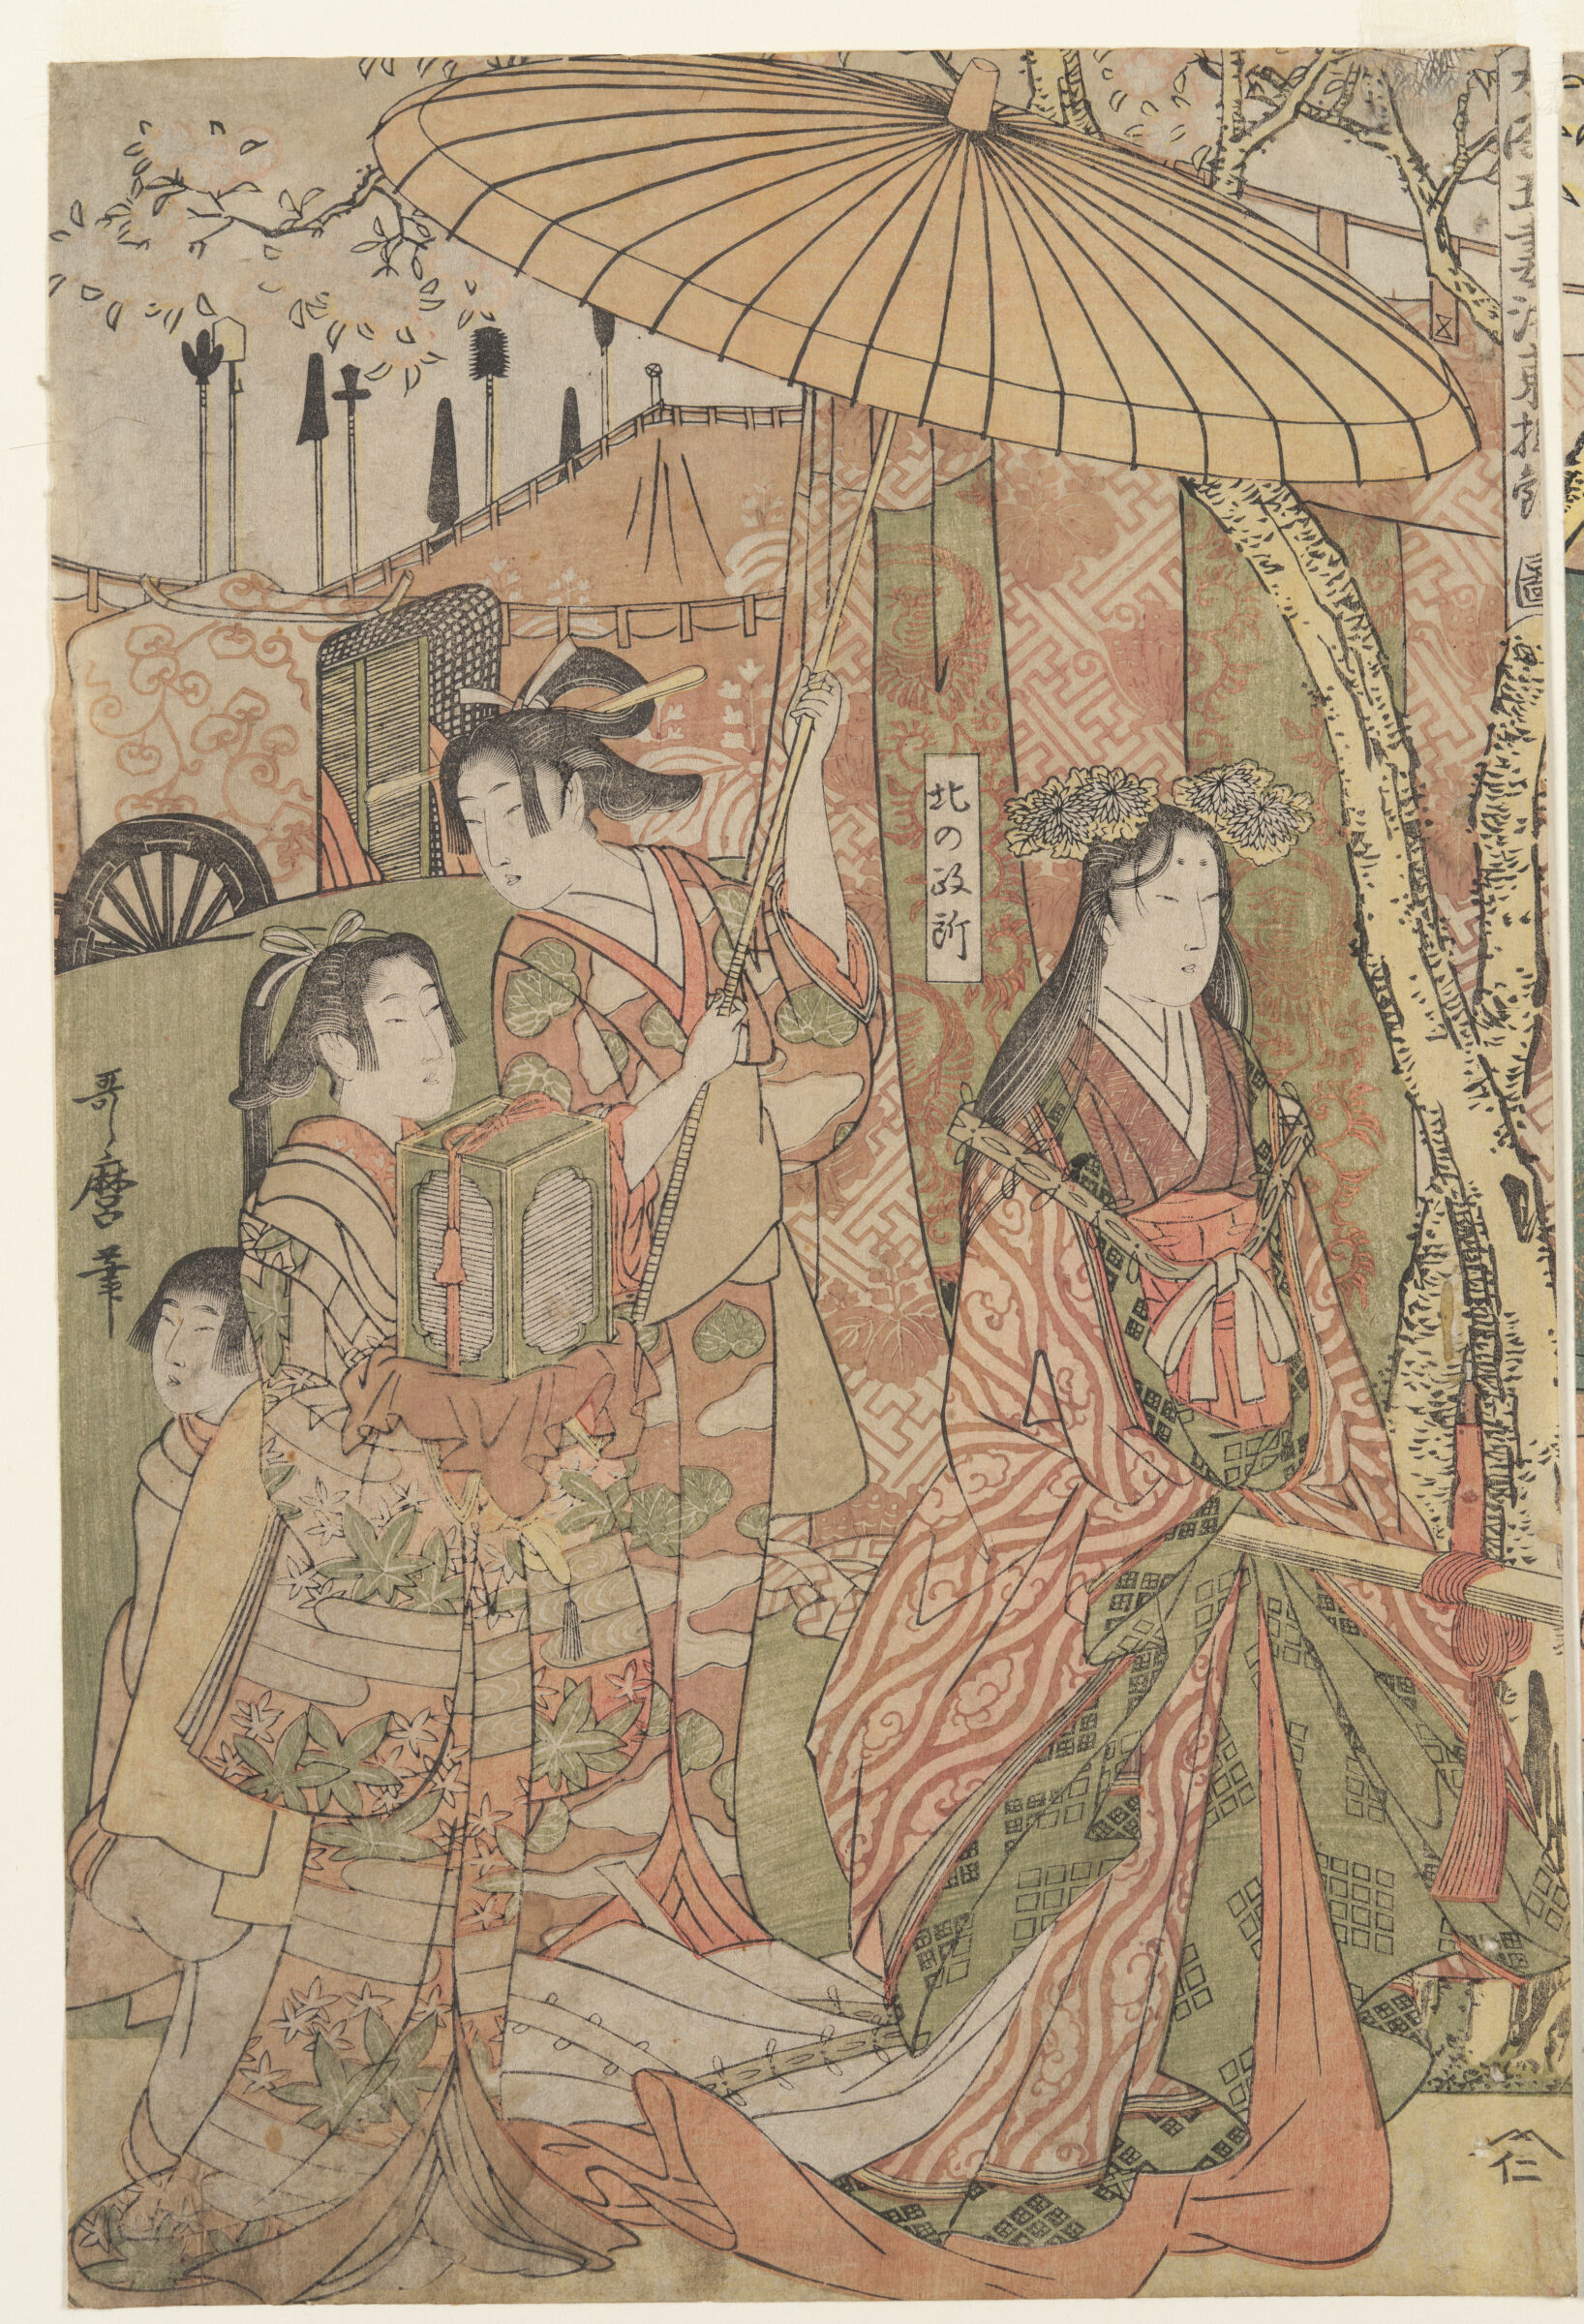 Hideyoshi And His Five Wives Viewing The Cherry Blossoms At Higashiyama